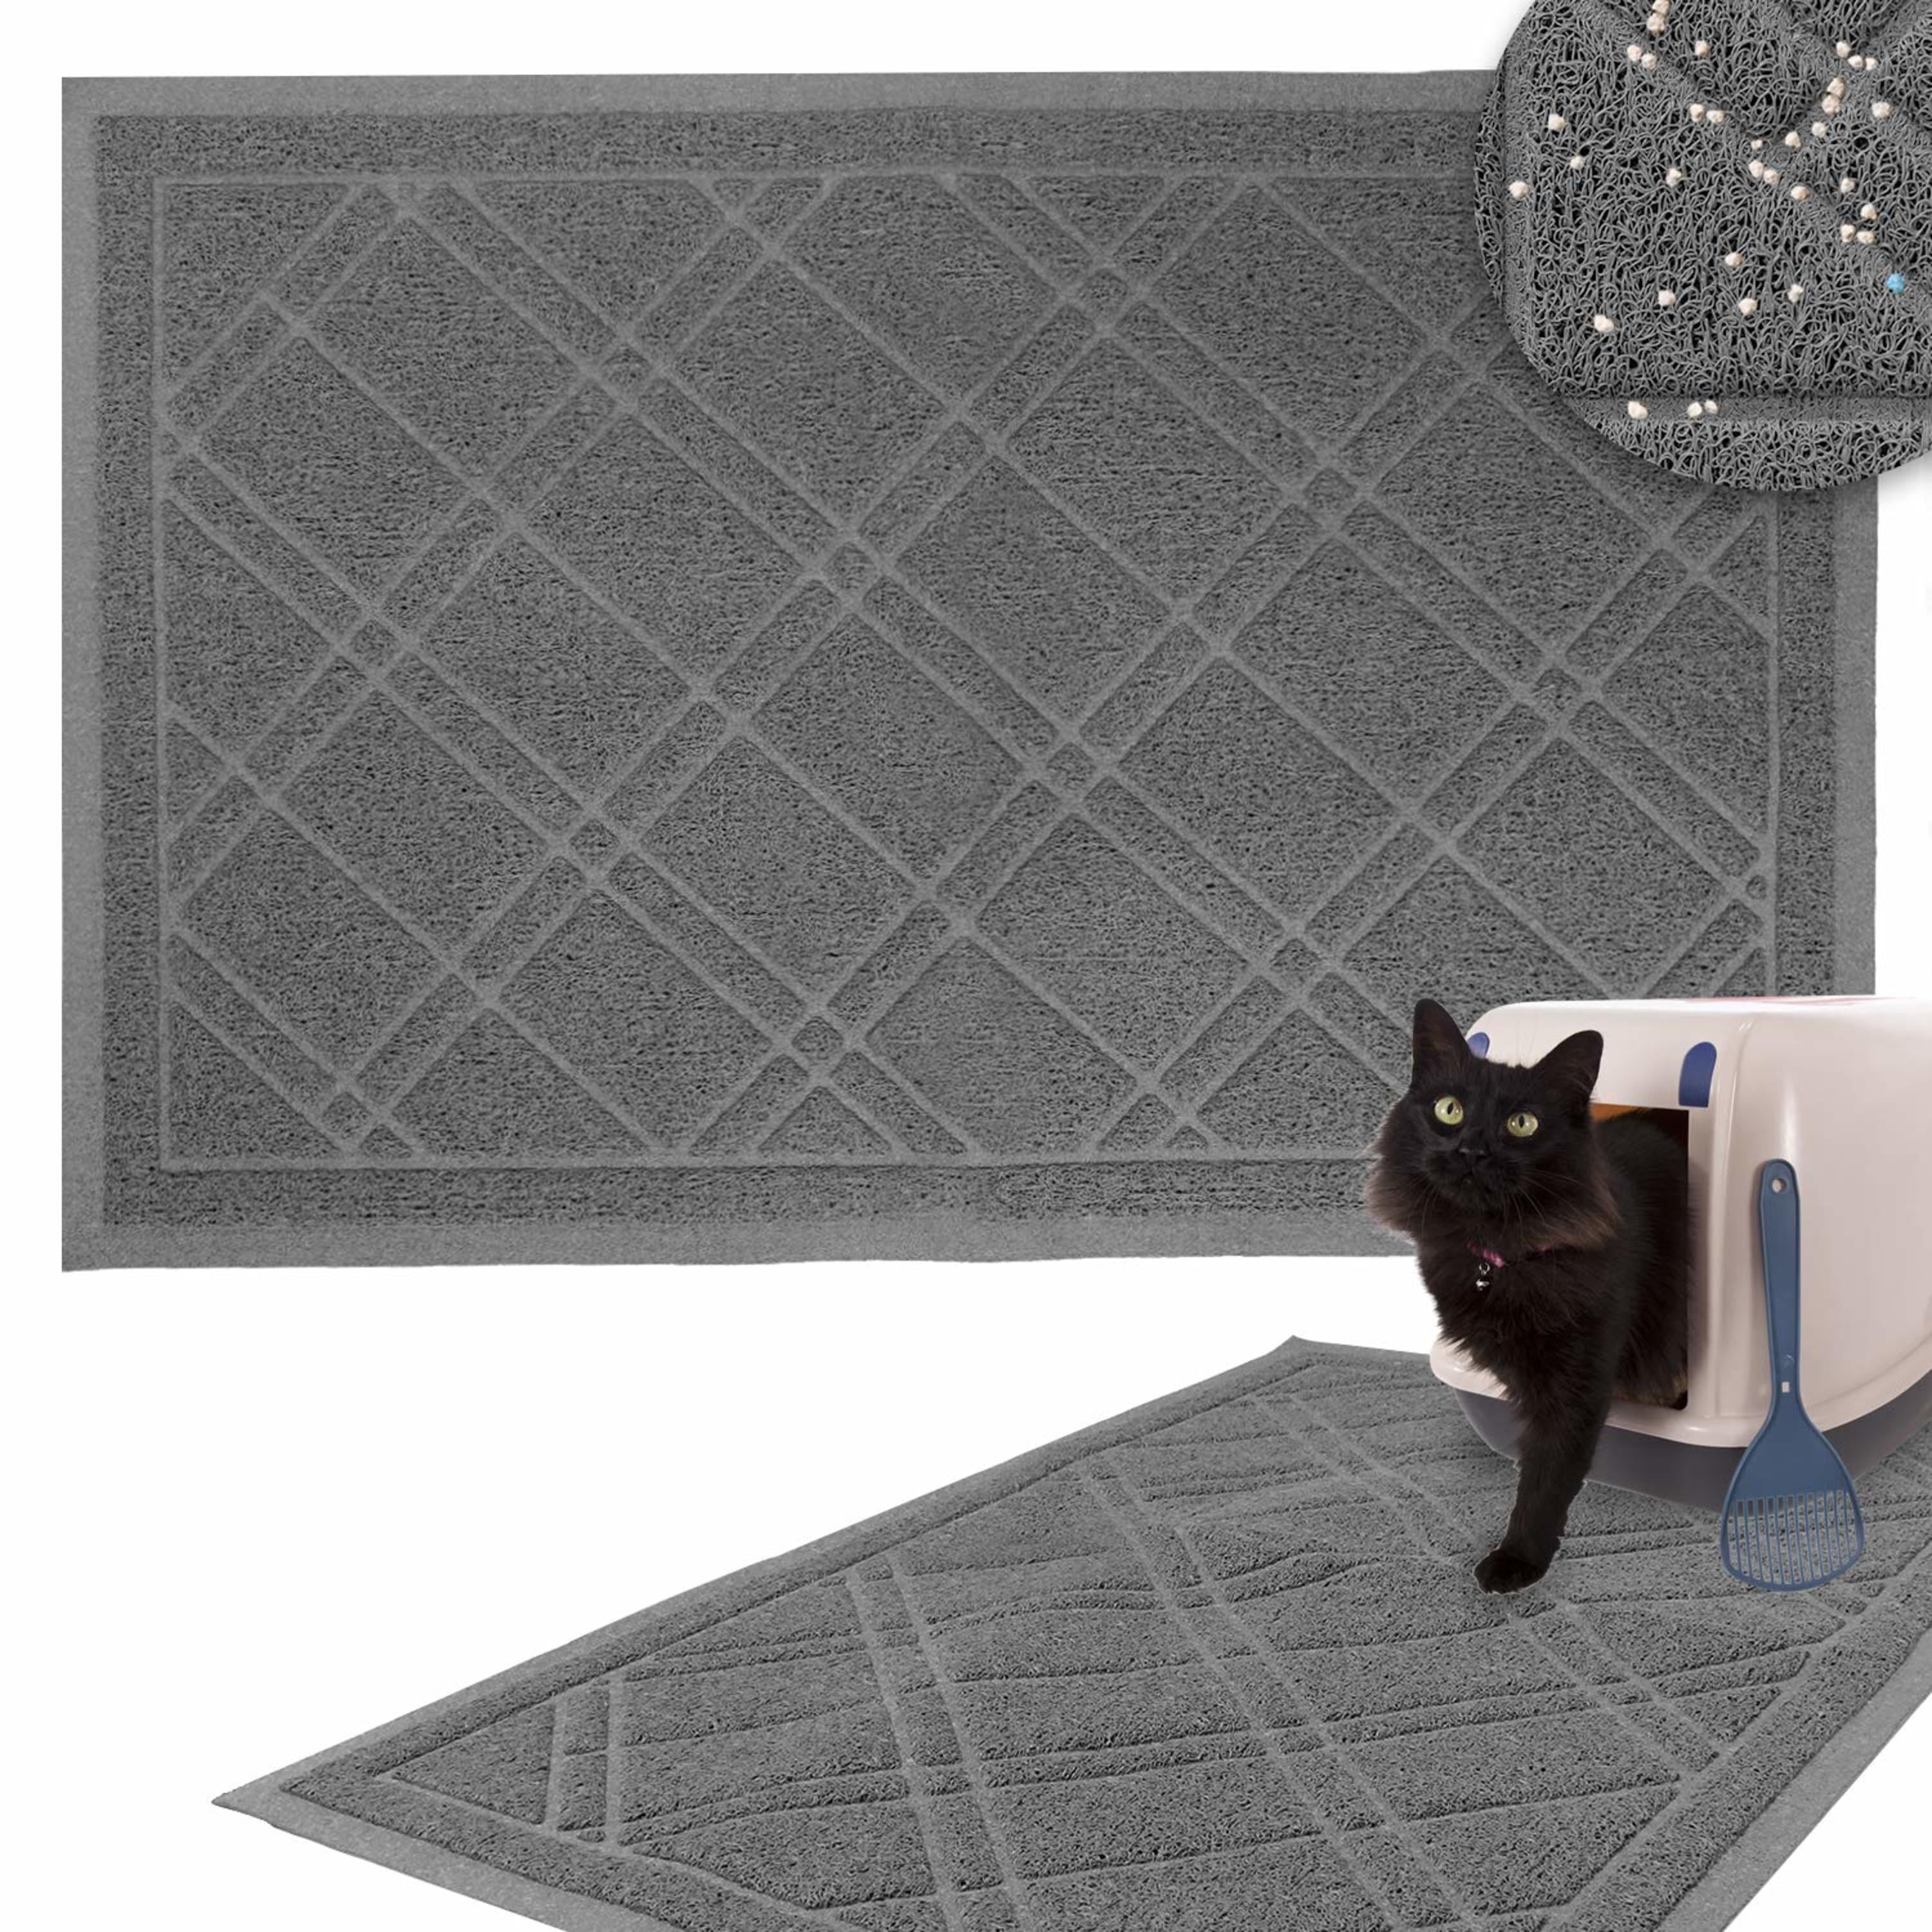 Drymate, Corner Cat Litter Mat, Gray 